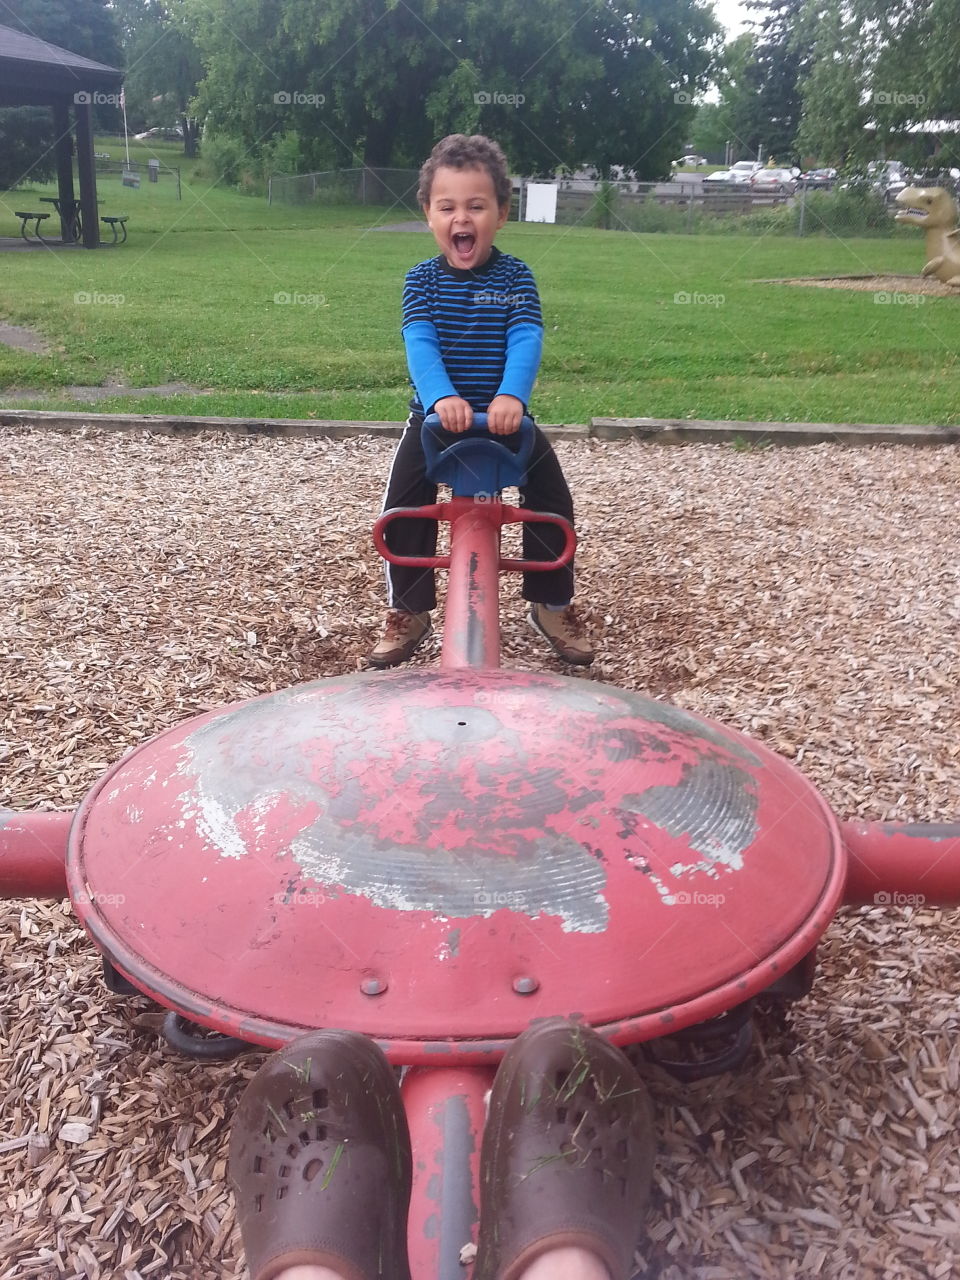 At the playground with Grandma. Boy having fun at park with his grandma